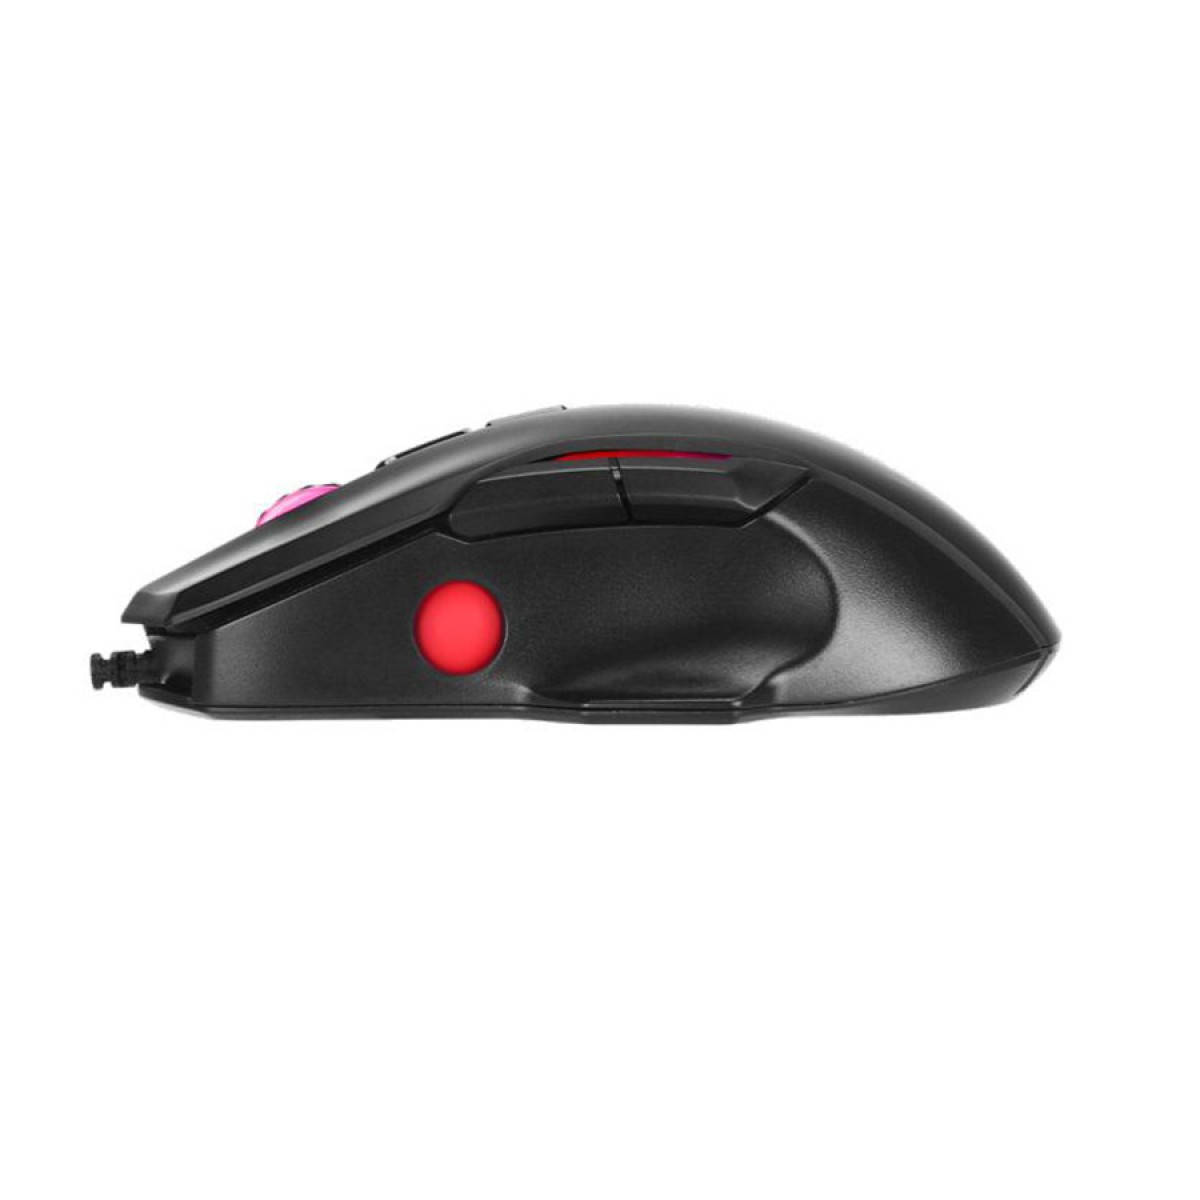 Mouse Gamer Marvo G945, 10.000 DPI, 9 Botões, RGB, Black